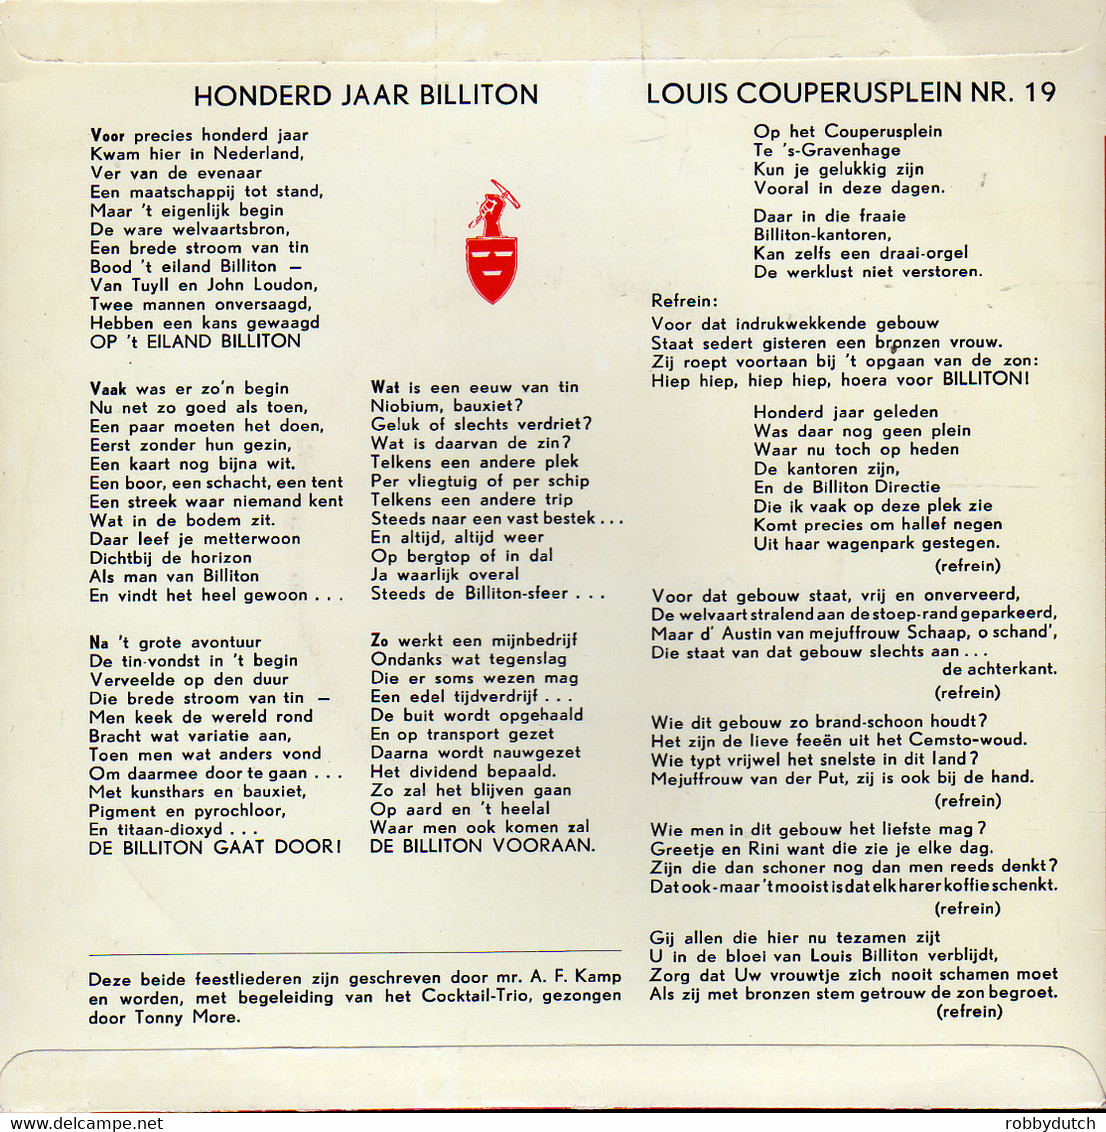 * 7" * COCKTAIL TRIO - 100 JAAR BILLITON MAATSCHAPPIJ (Holland 1960 EX) - Other - Dutch Music